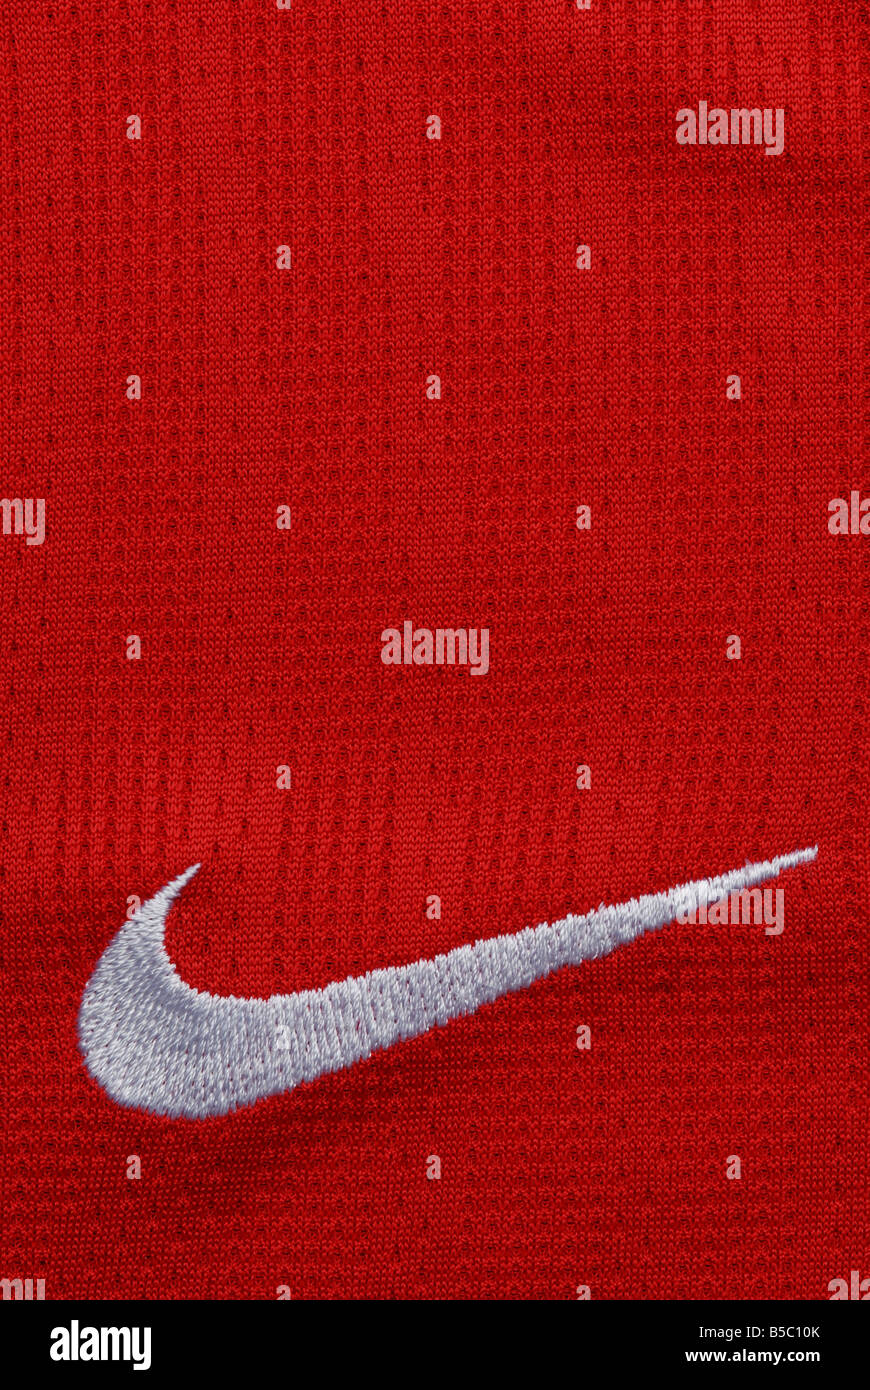 Nike-Haken Stockfotografie - Alamy